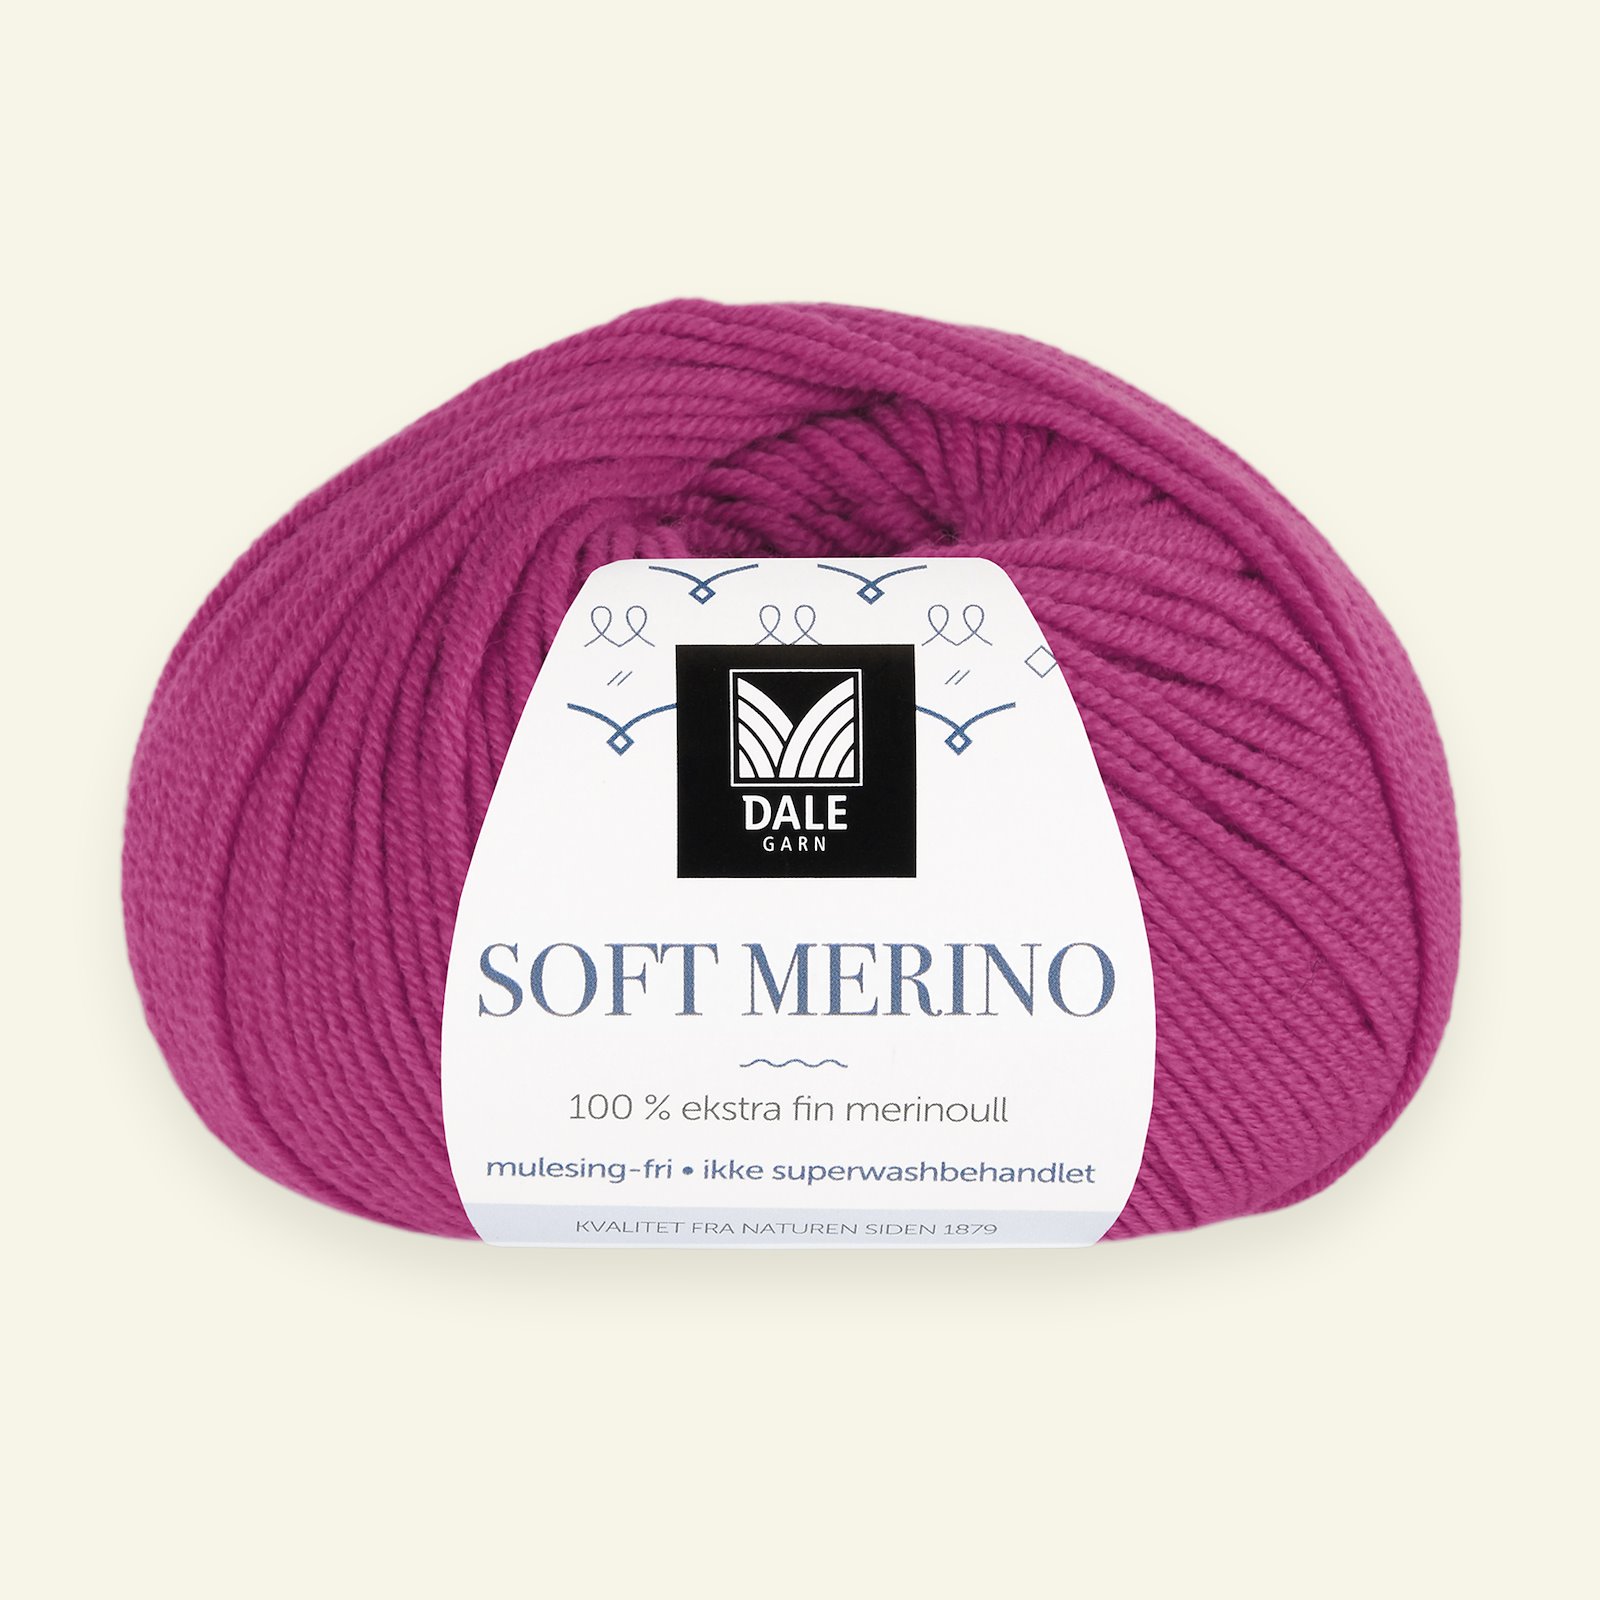 Dale Garn, 100% extra fine merino wool yarn, "Soft Merino", pink (3028) 90000349_pack